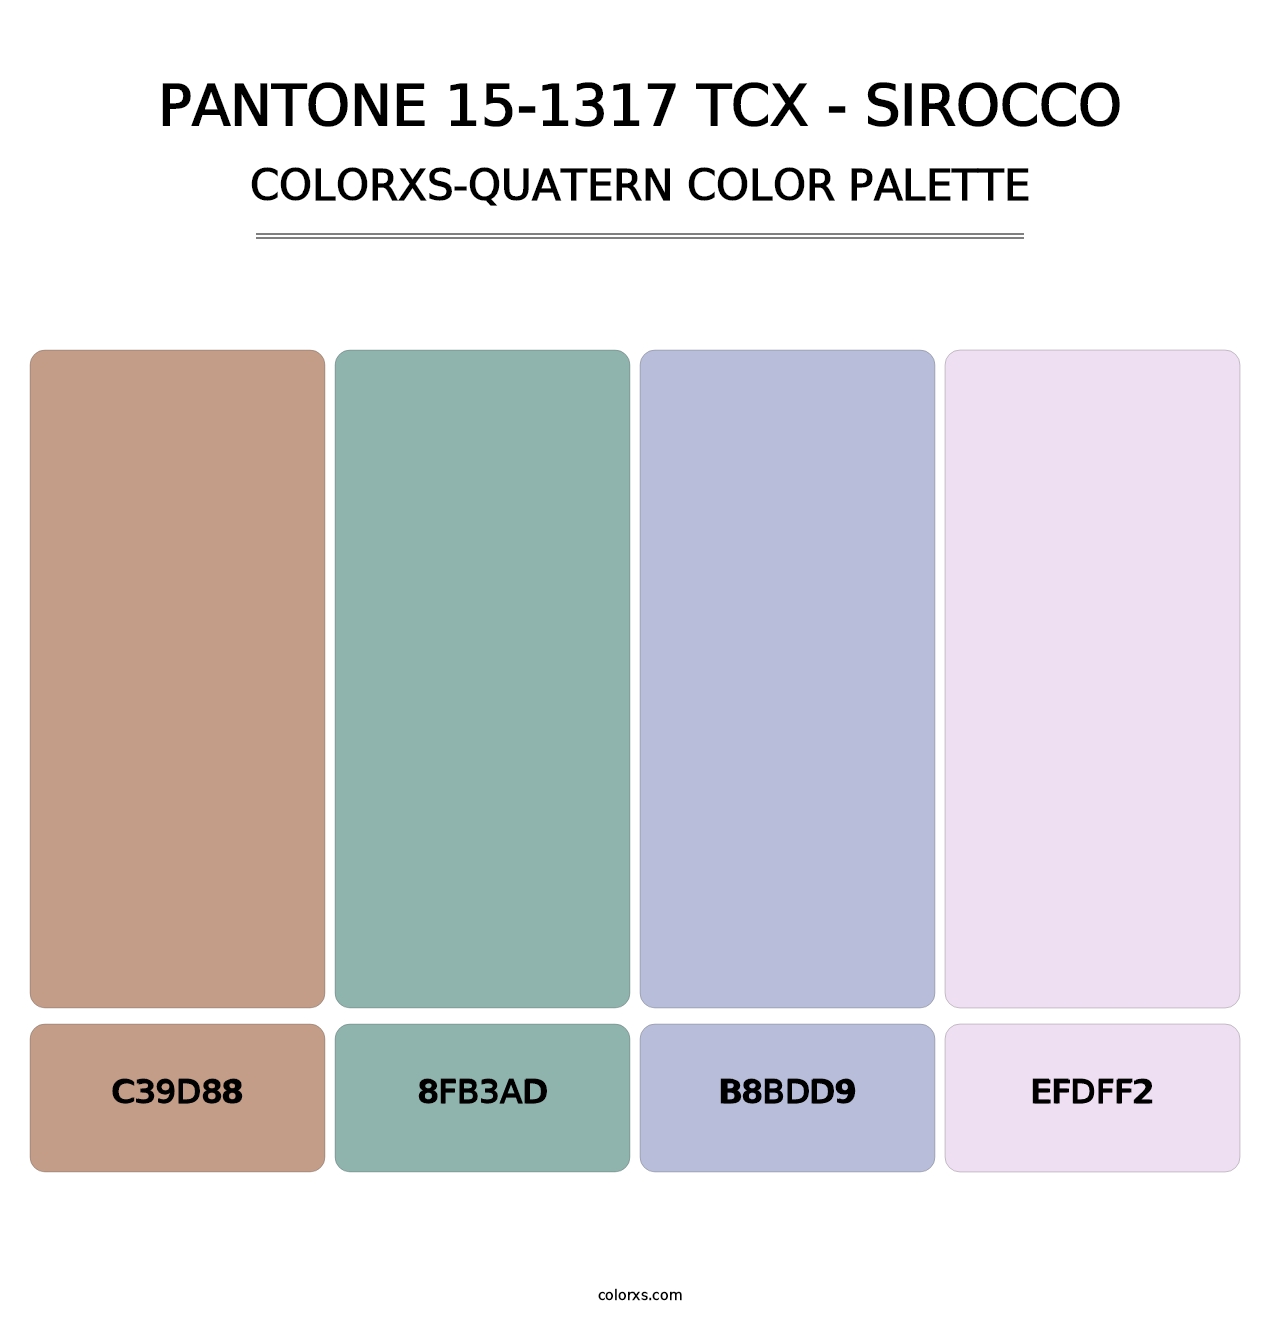 PANTONE 15-1317 TCX - Sirocco - Colorxs Quatern Palette